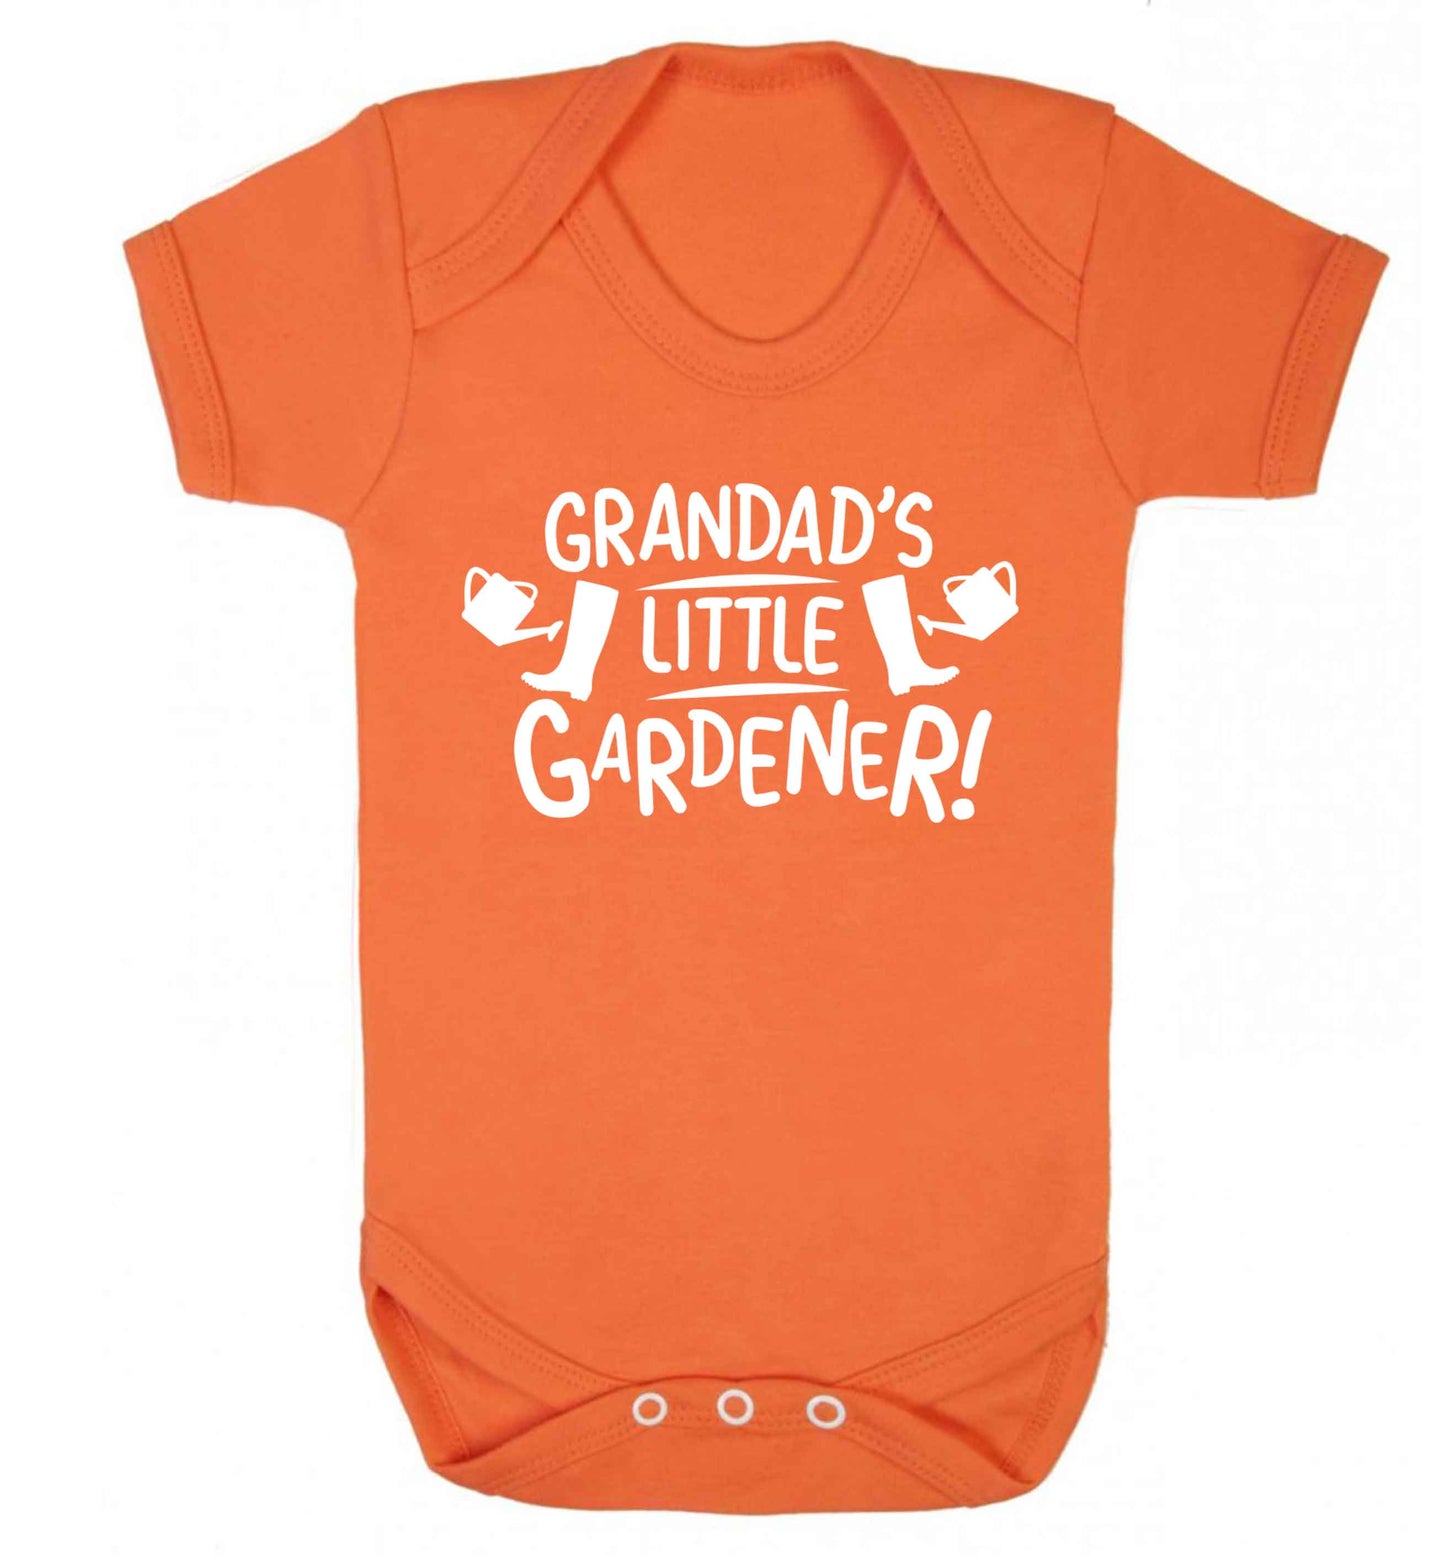 Grandad's little gardener Baby Vest orange 18-24 months